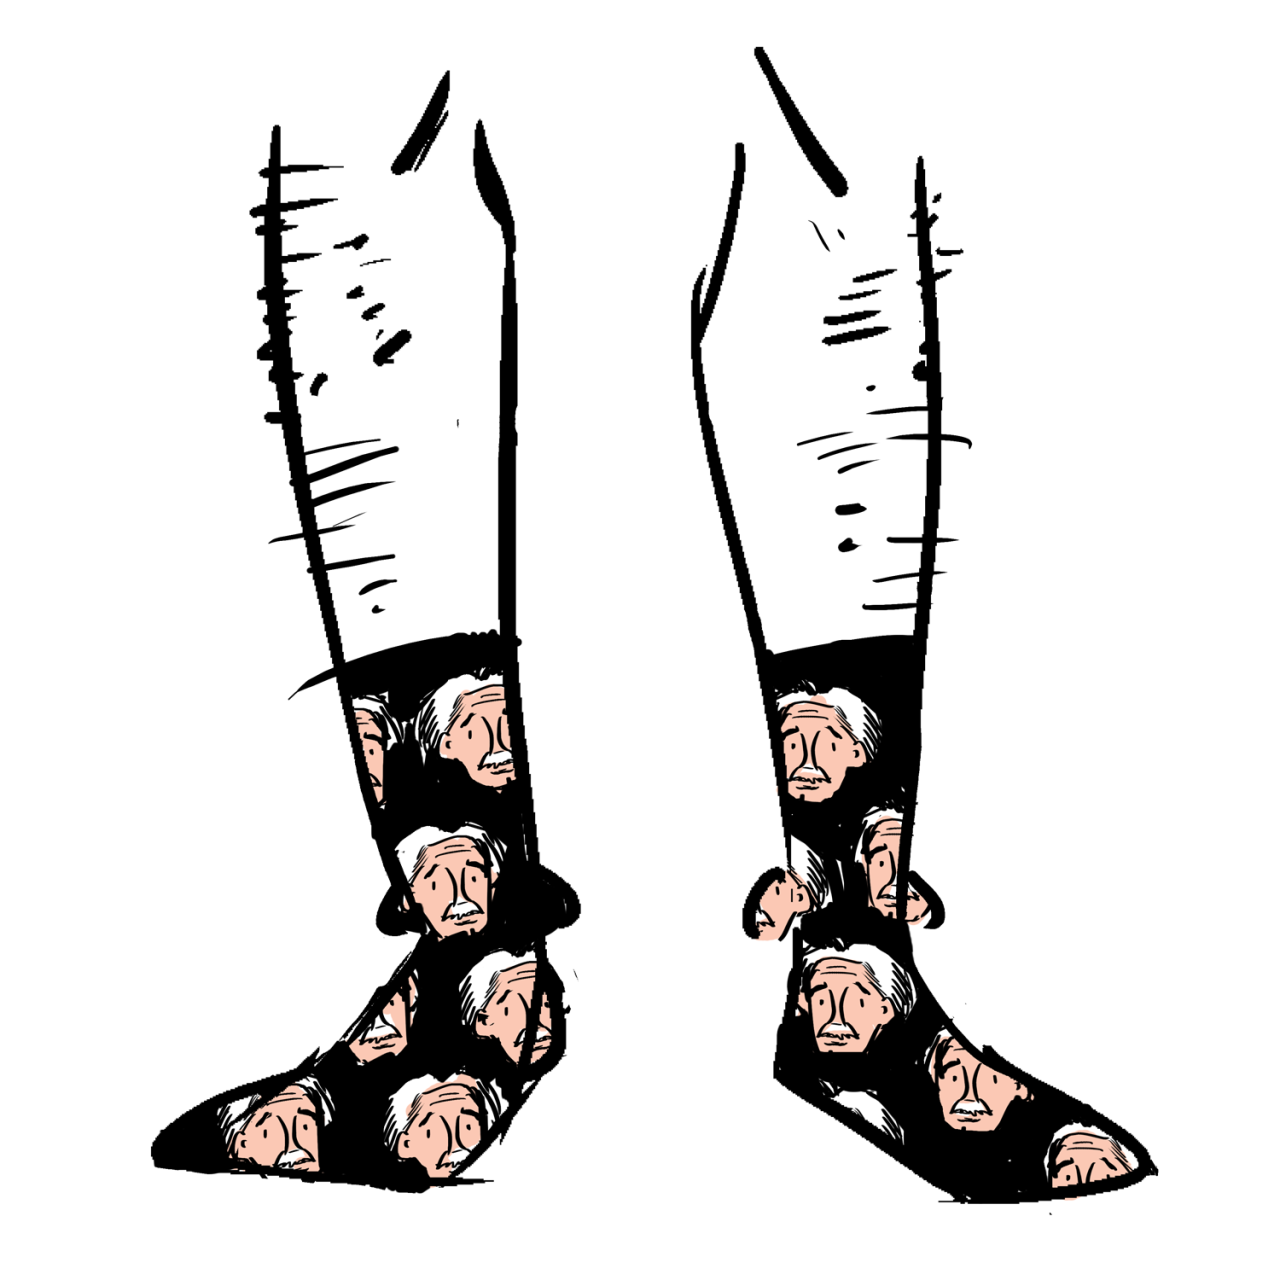 Black socks with Einstein faces on them